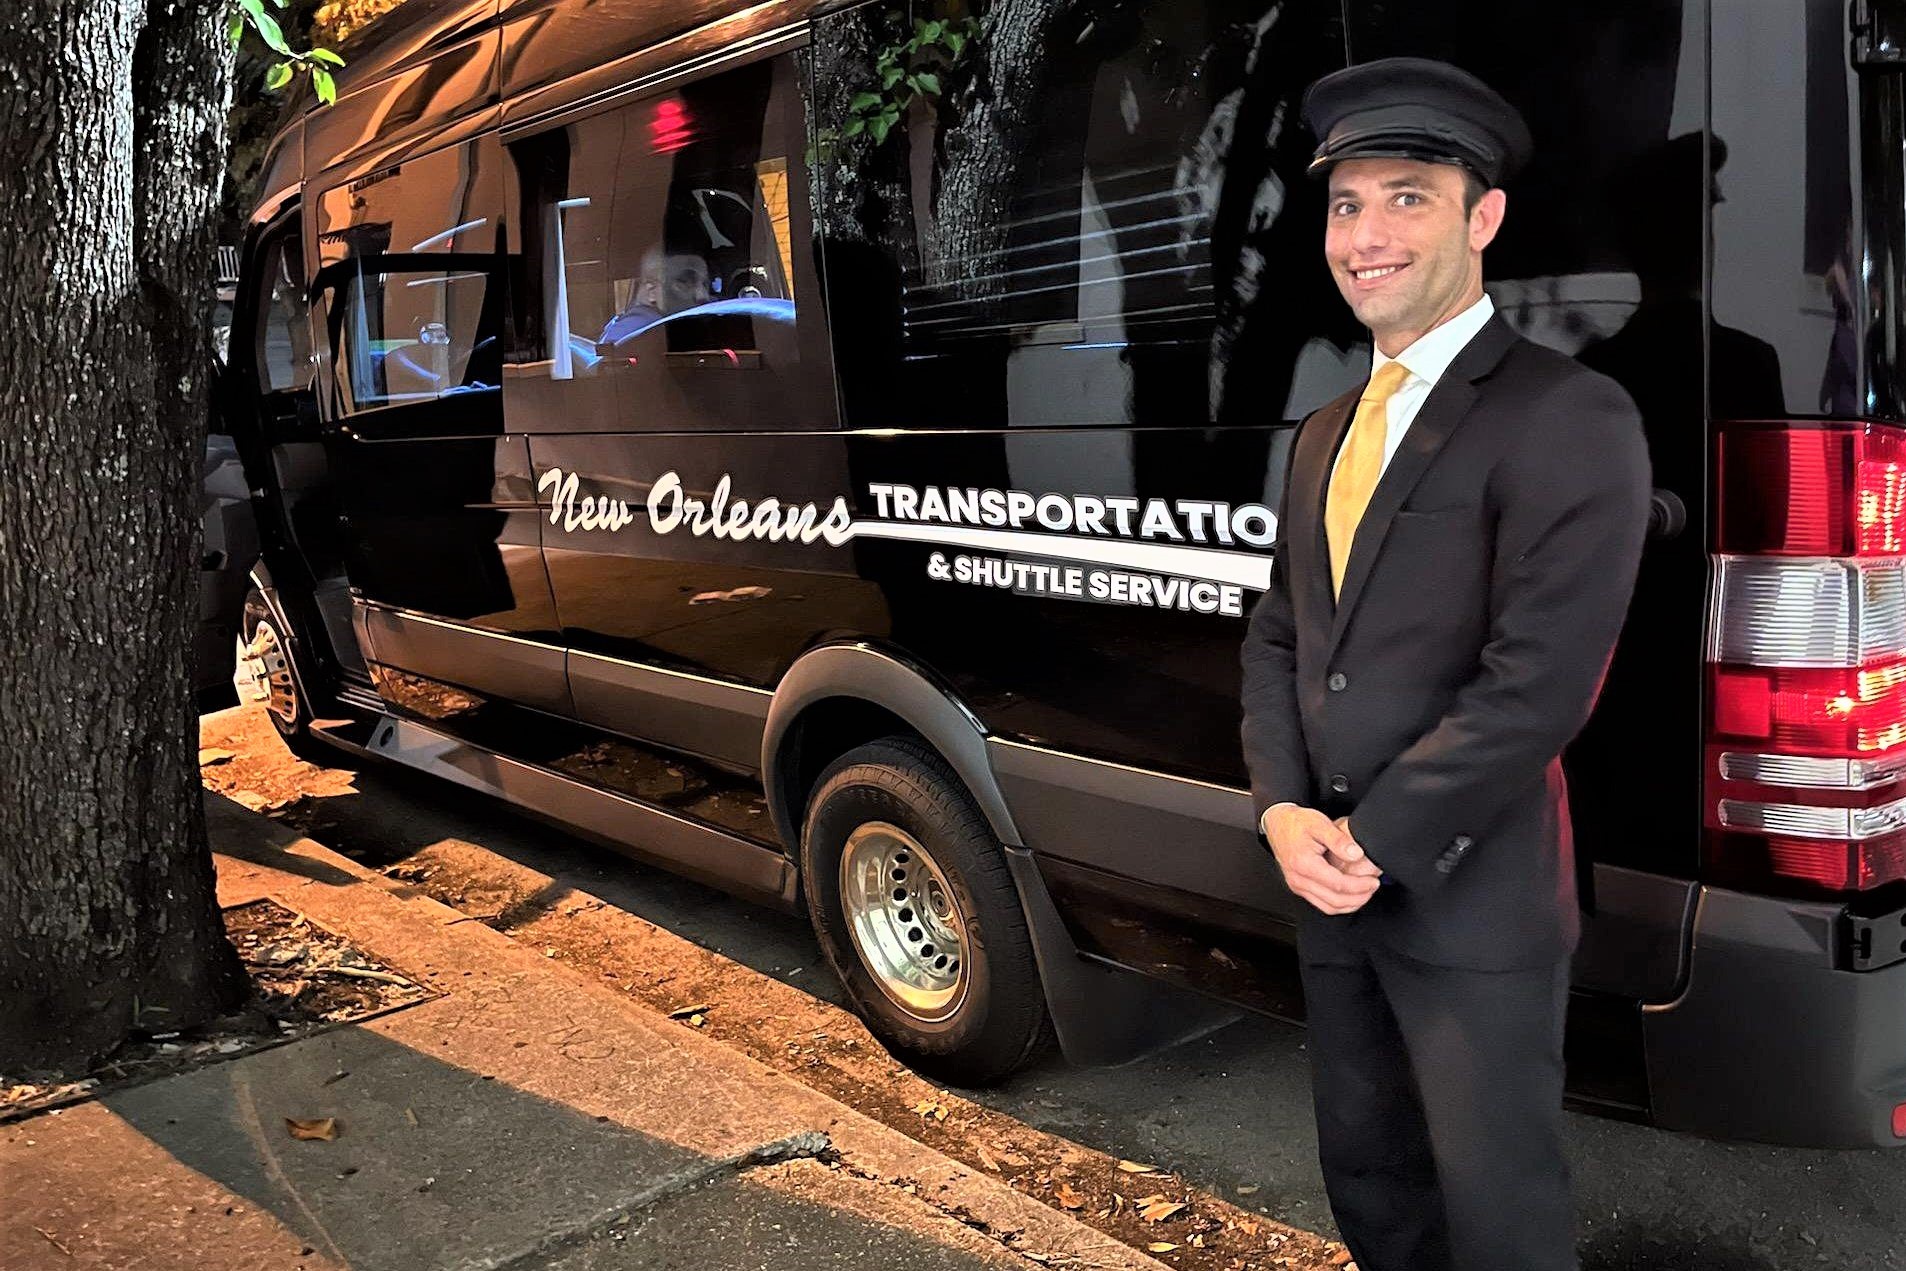 New Orleans Transportation Service